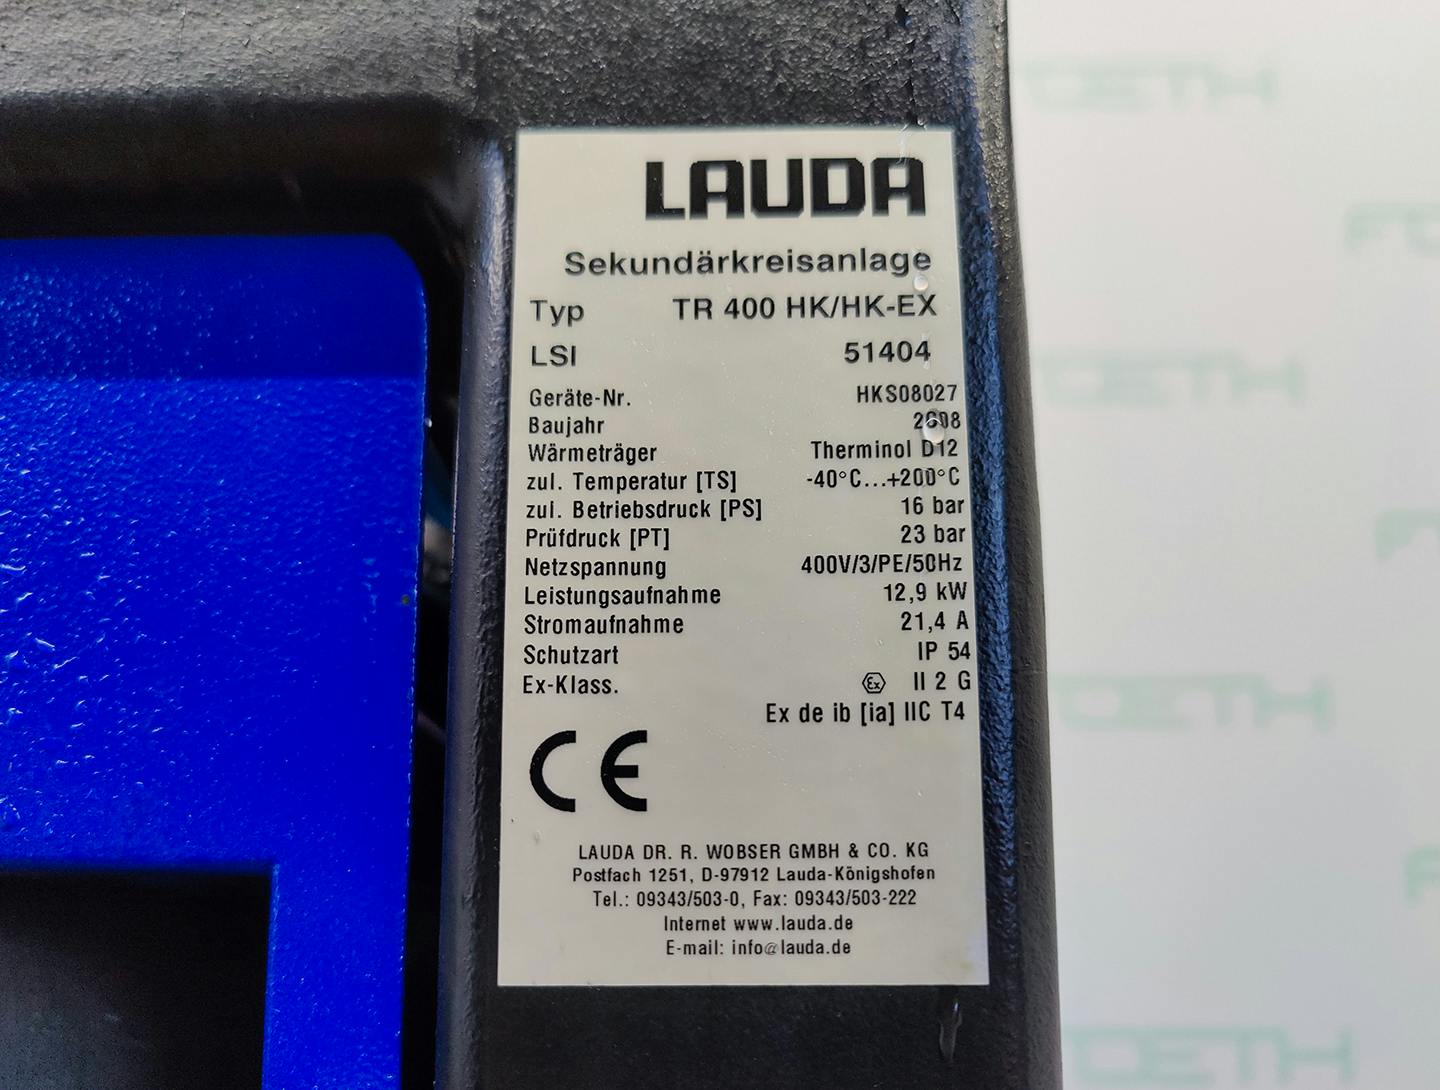 Lauda TR400 HK/HK-EX "secondary circuit system" - Unità di fluido termico - image 6